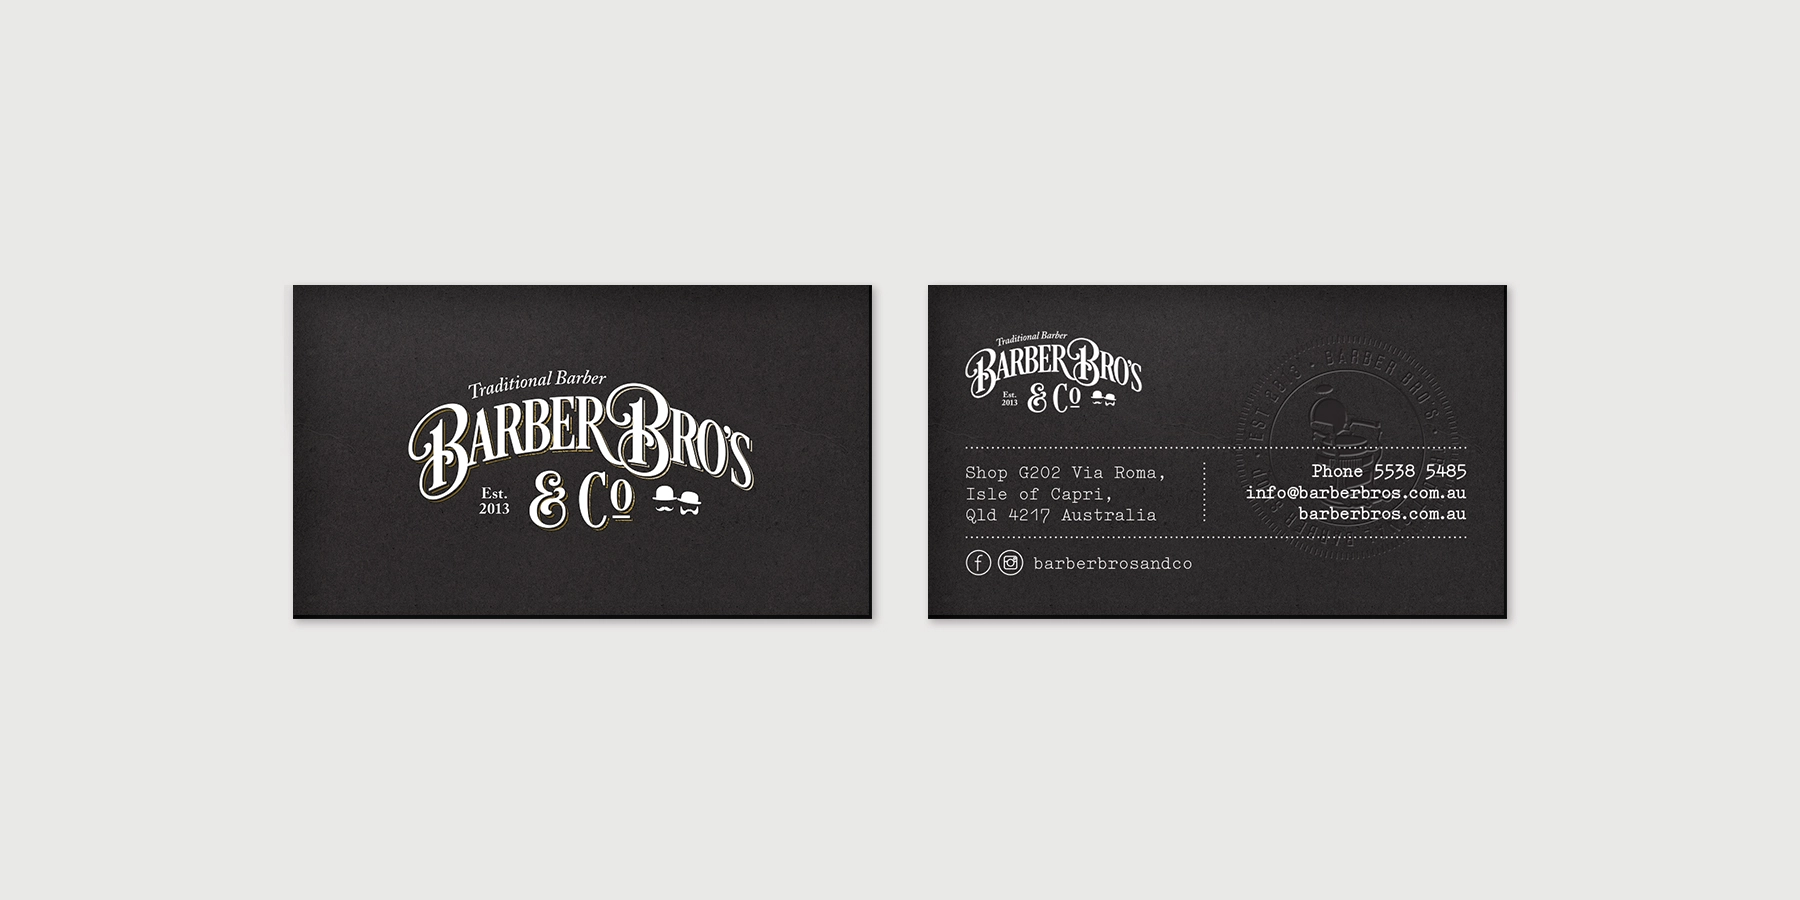 Barber Bros & Co business card design by Kaliber Studio